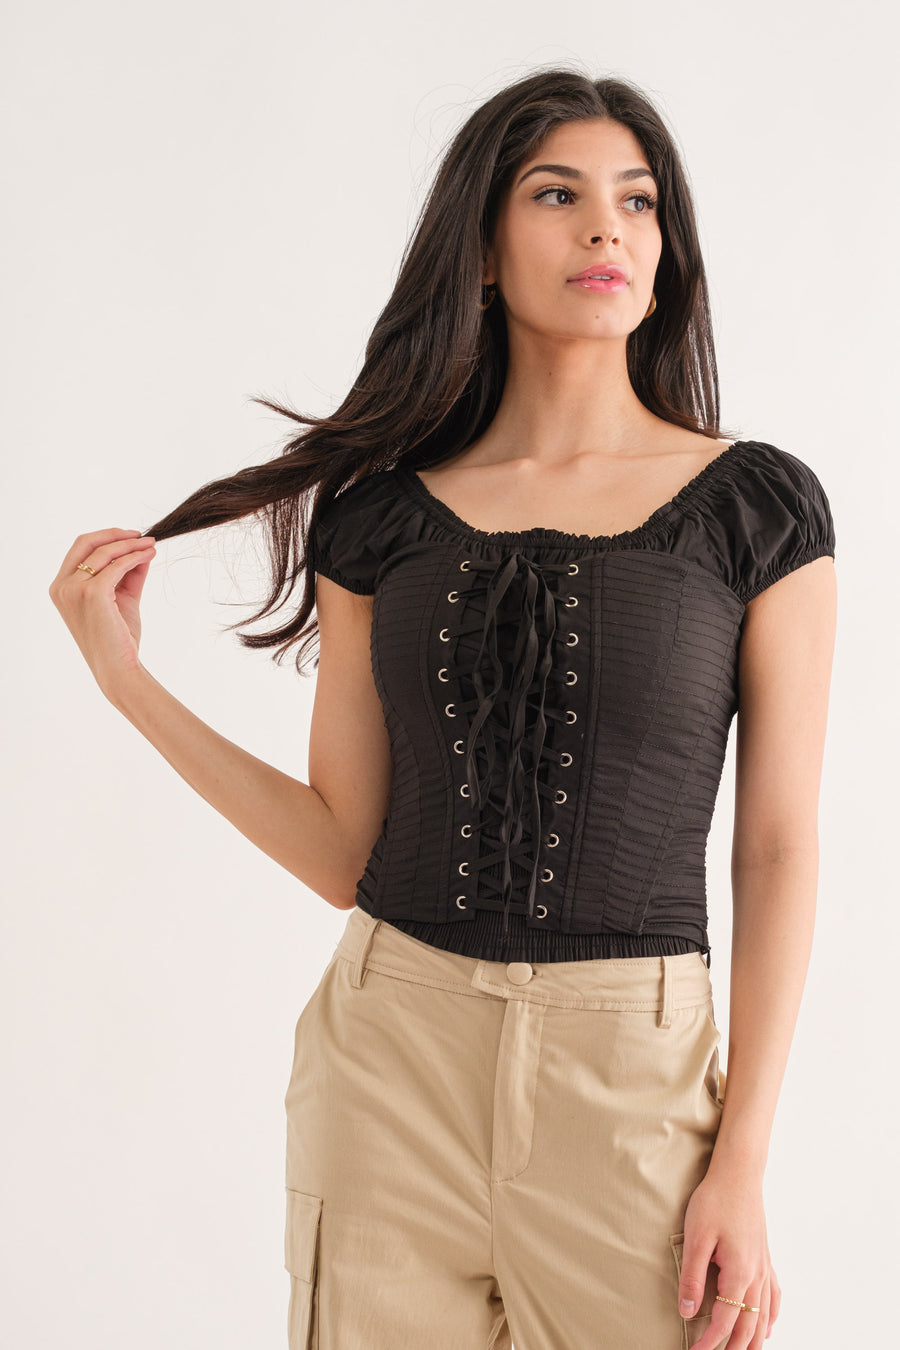 AOK0168-Off shoulder two piece stitch detail  corset